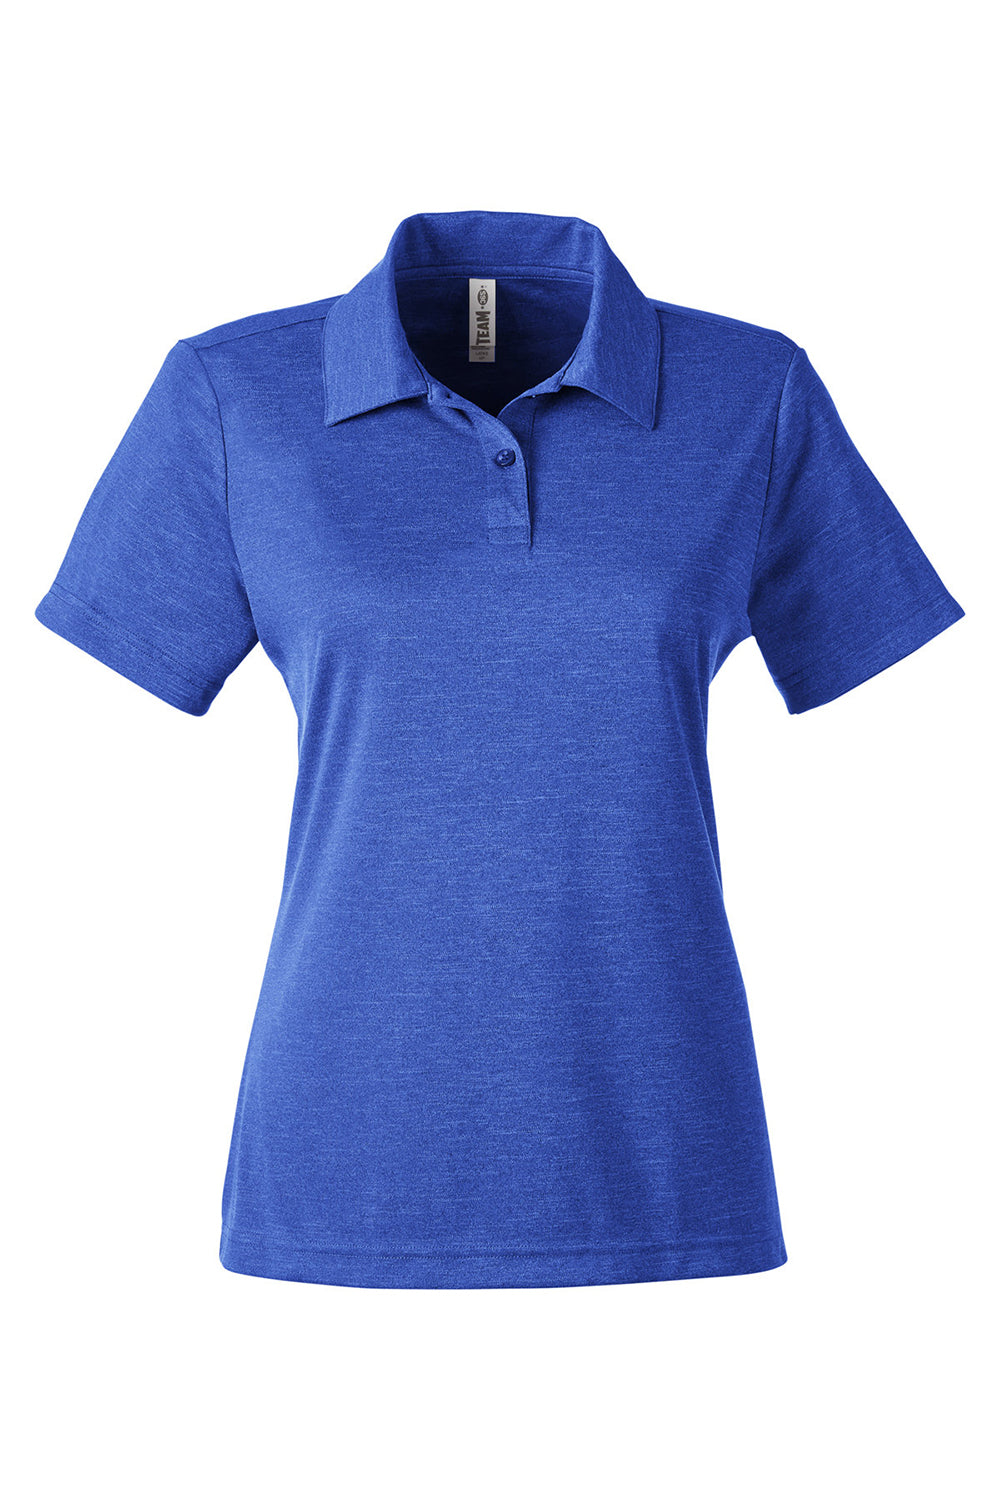 Team 365 TT51HW Womens Zone Sonic Moisture Wicking Short Sleeve Polo Shirt Heather Royal Blue Flat Front